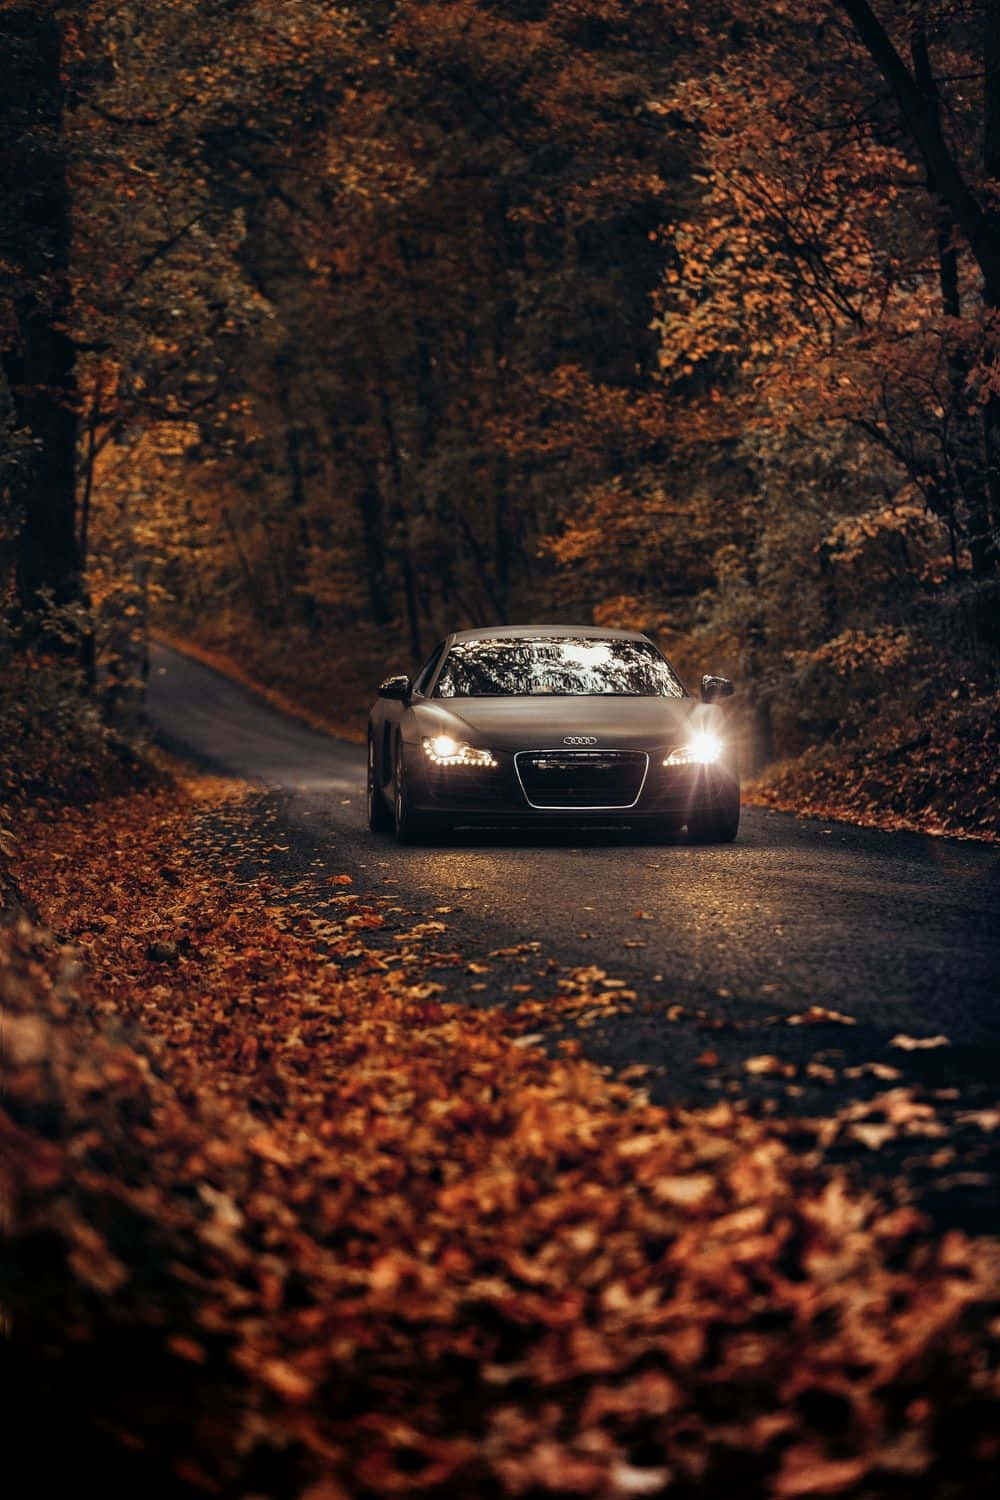 Captivating Audi TT in Striking Scenery Wallpaper